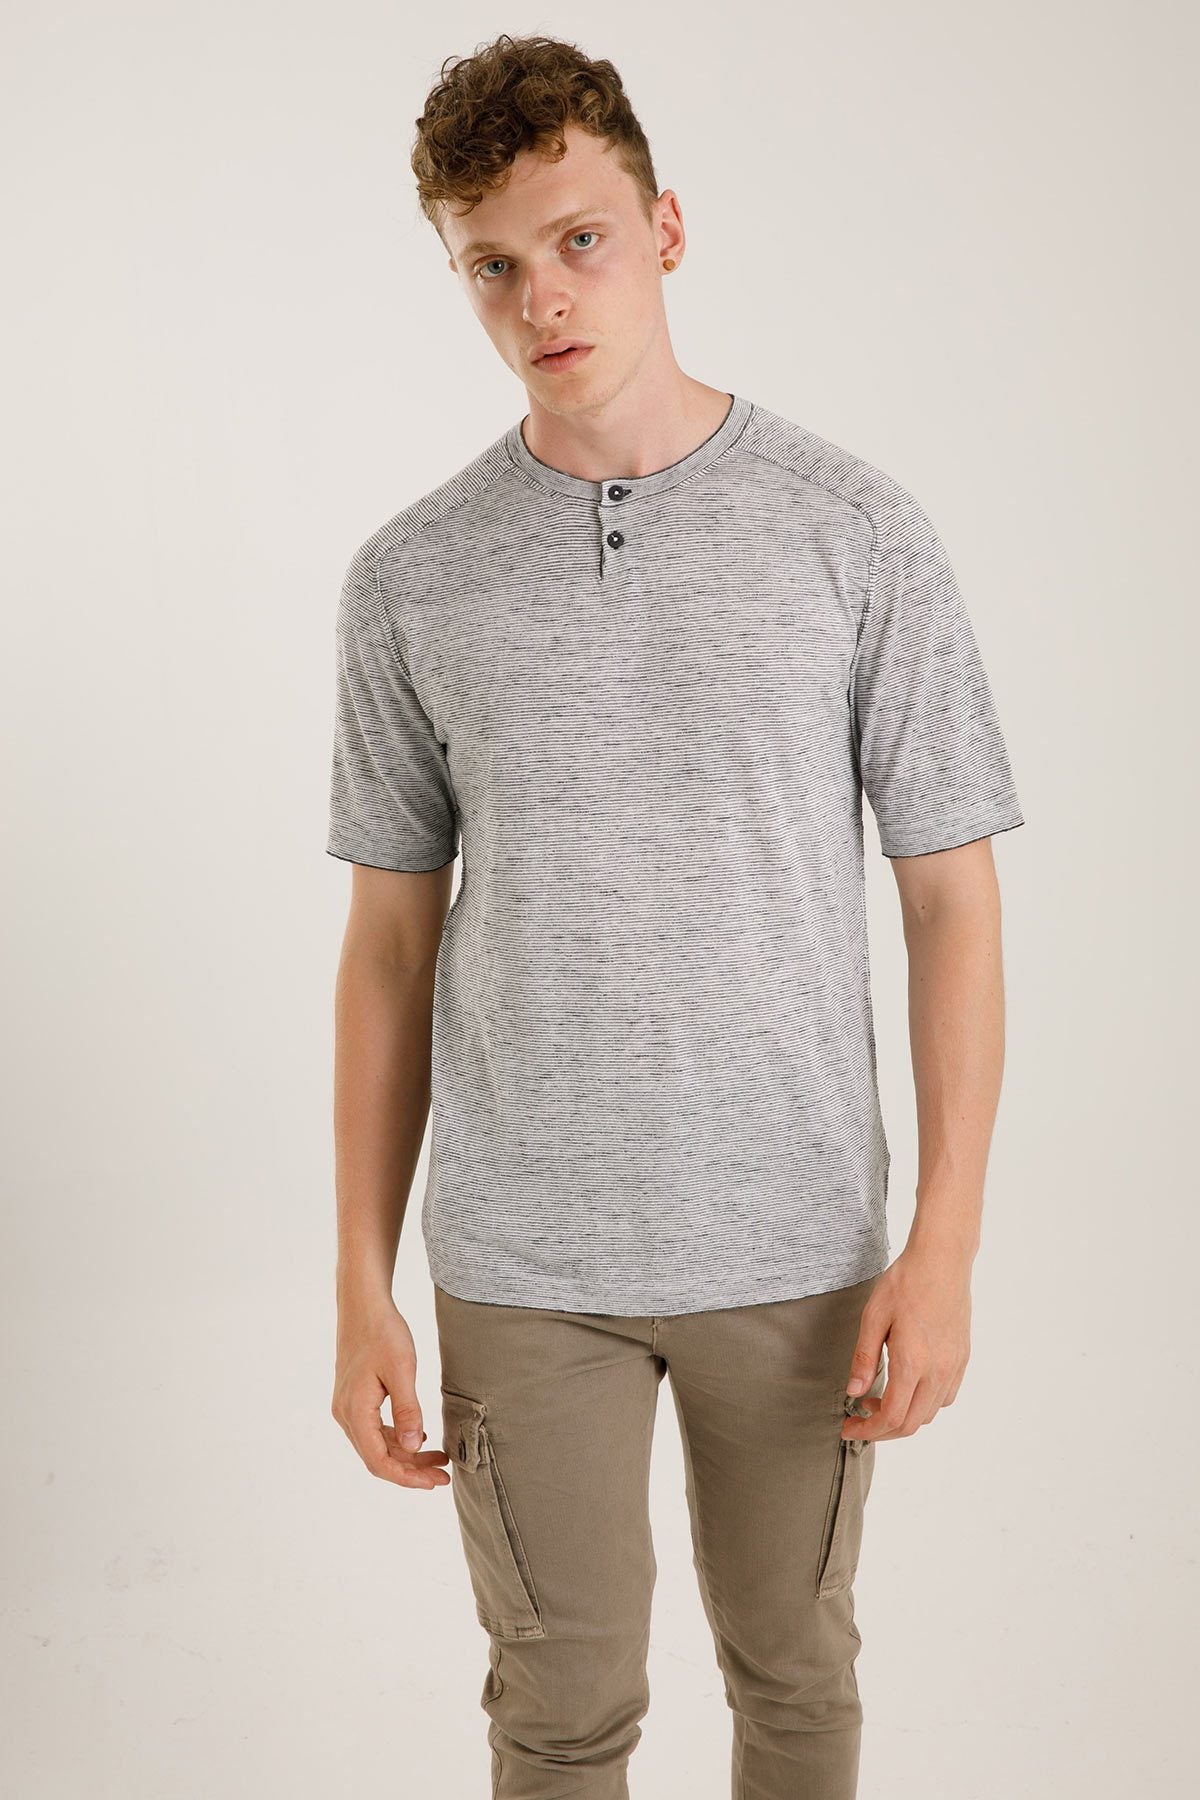 Transit İpek Karışımlı Düğmeli Yuvarlak Yaka T-shirt-Libas Trendy Fashion Store